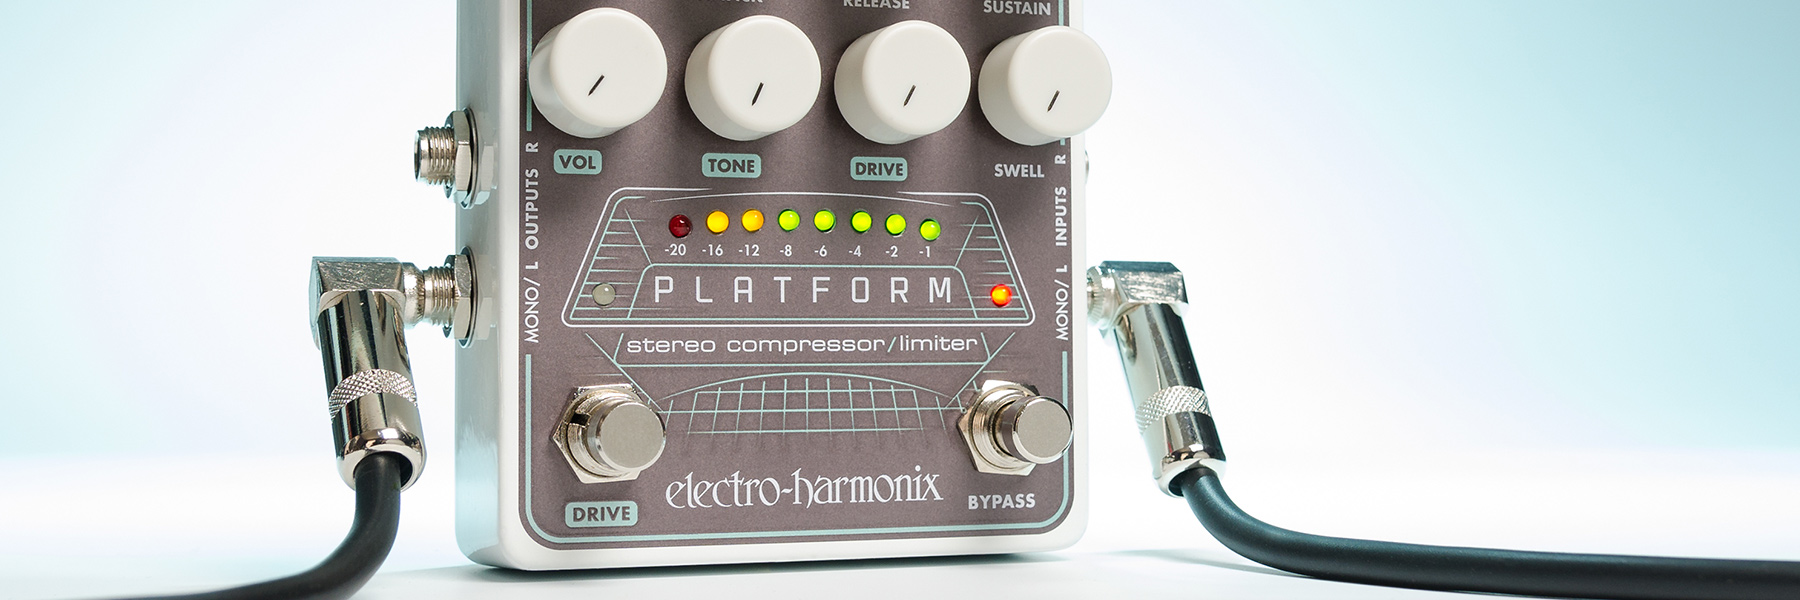 Platform | electro-harmonix -国内公式サイト-